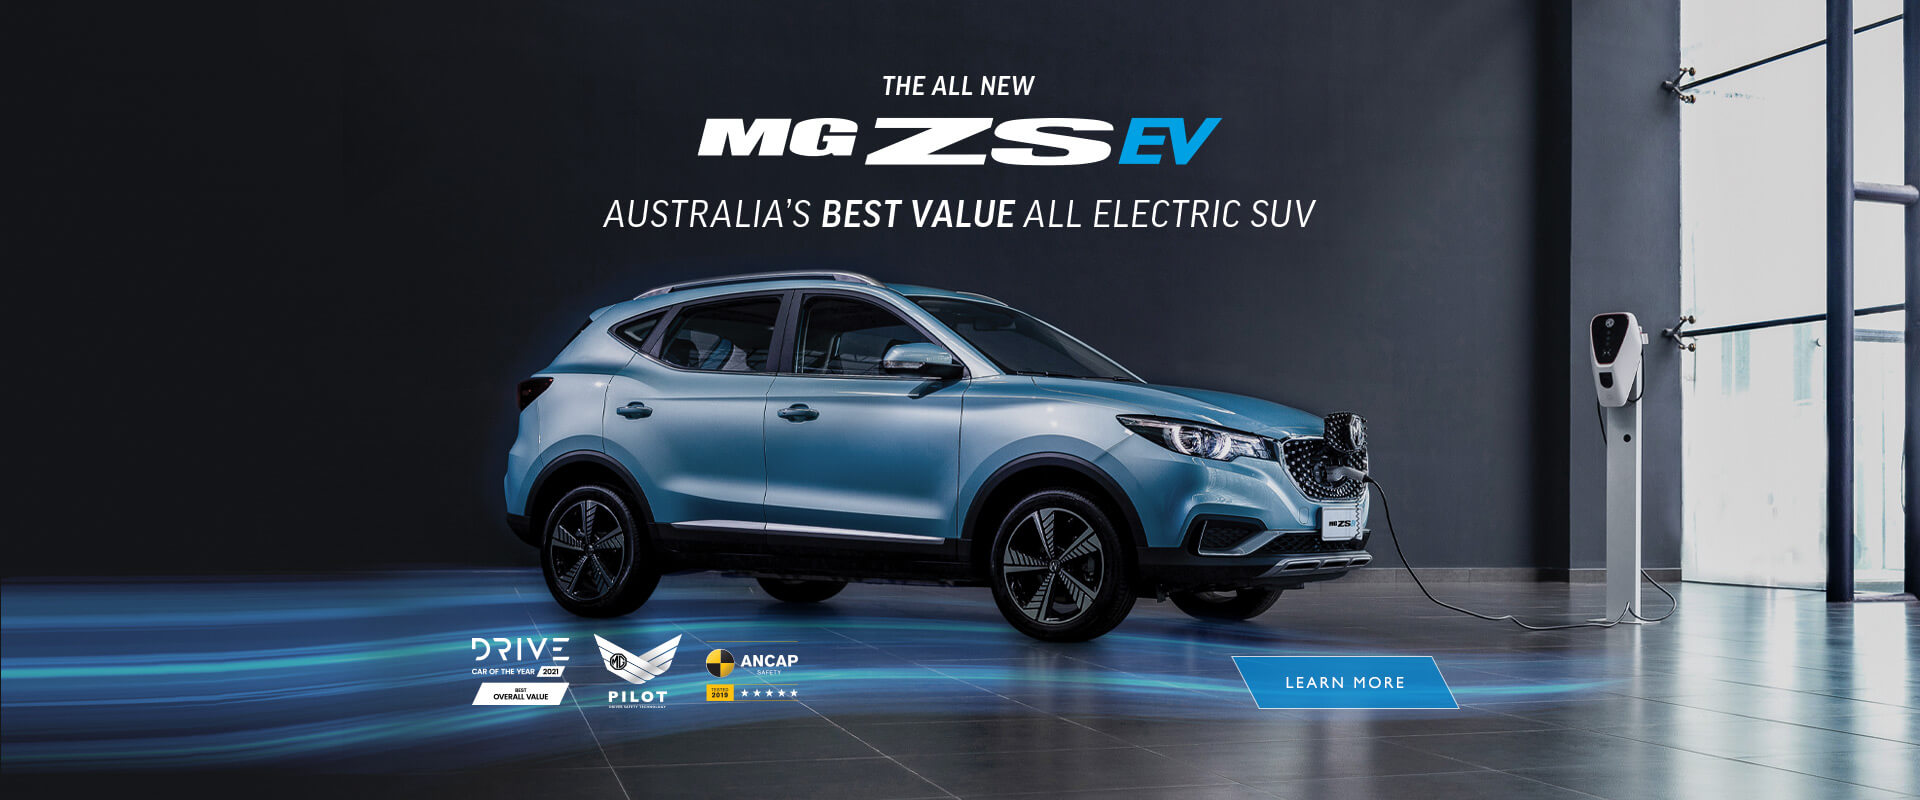 MG ZS EV. Australia's best value all electric SUV.